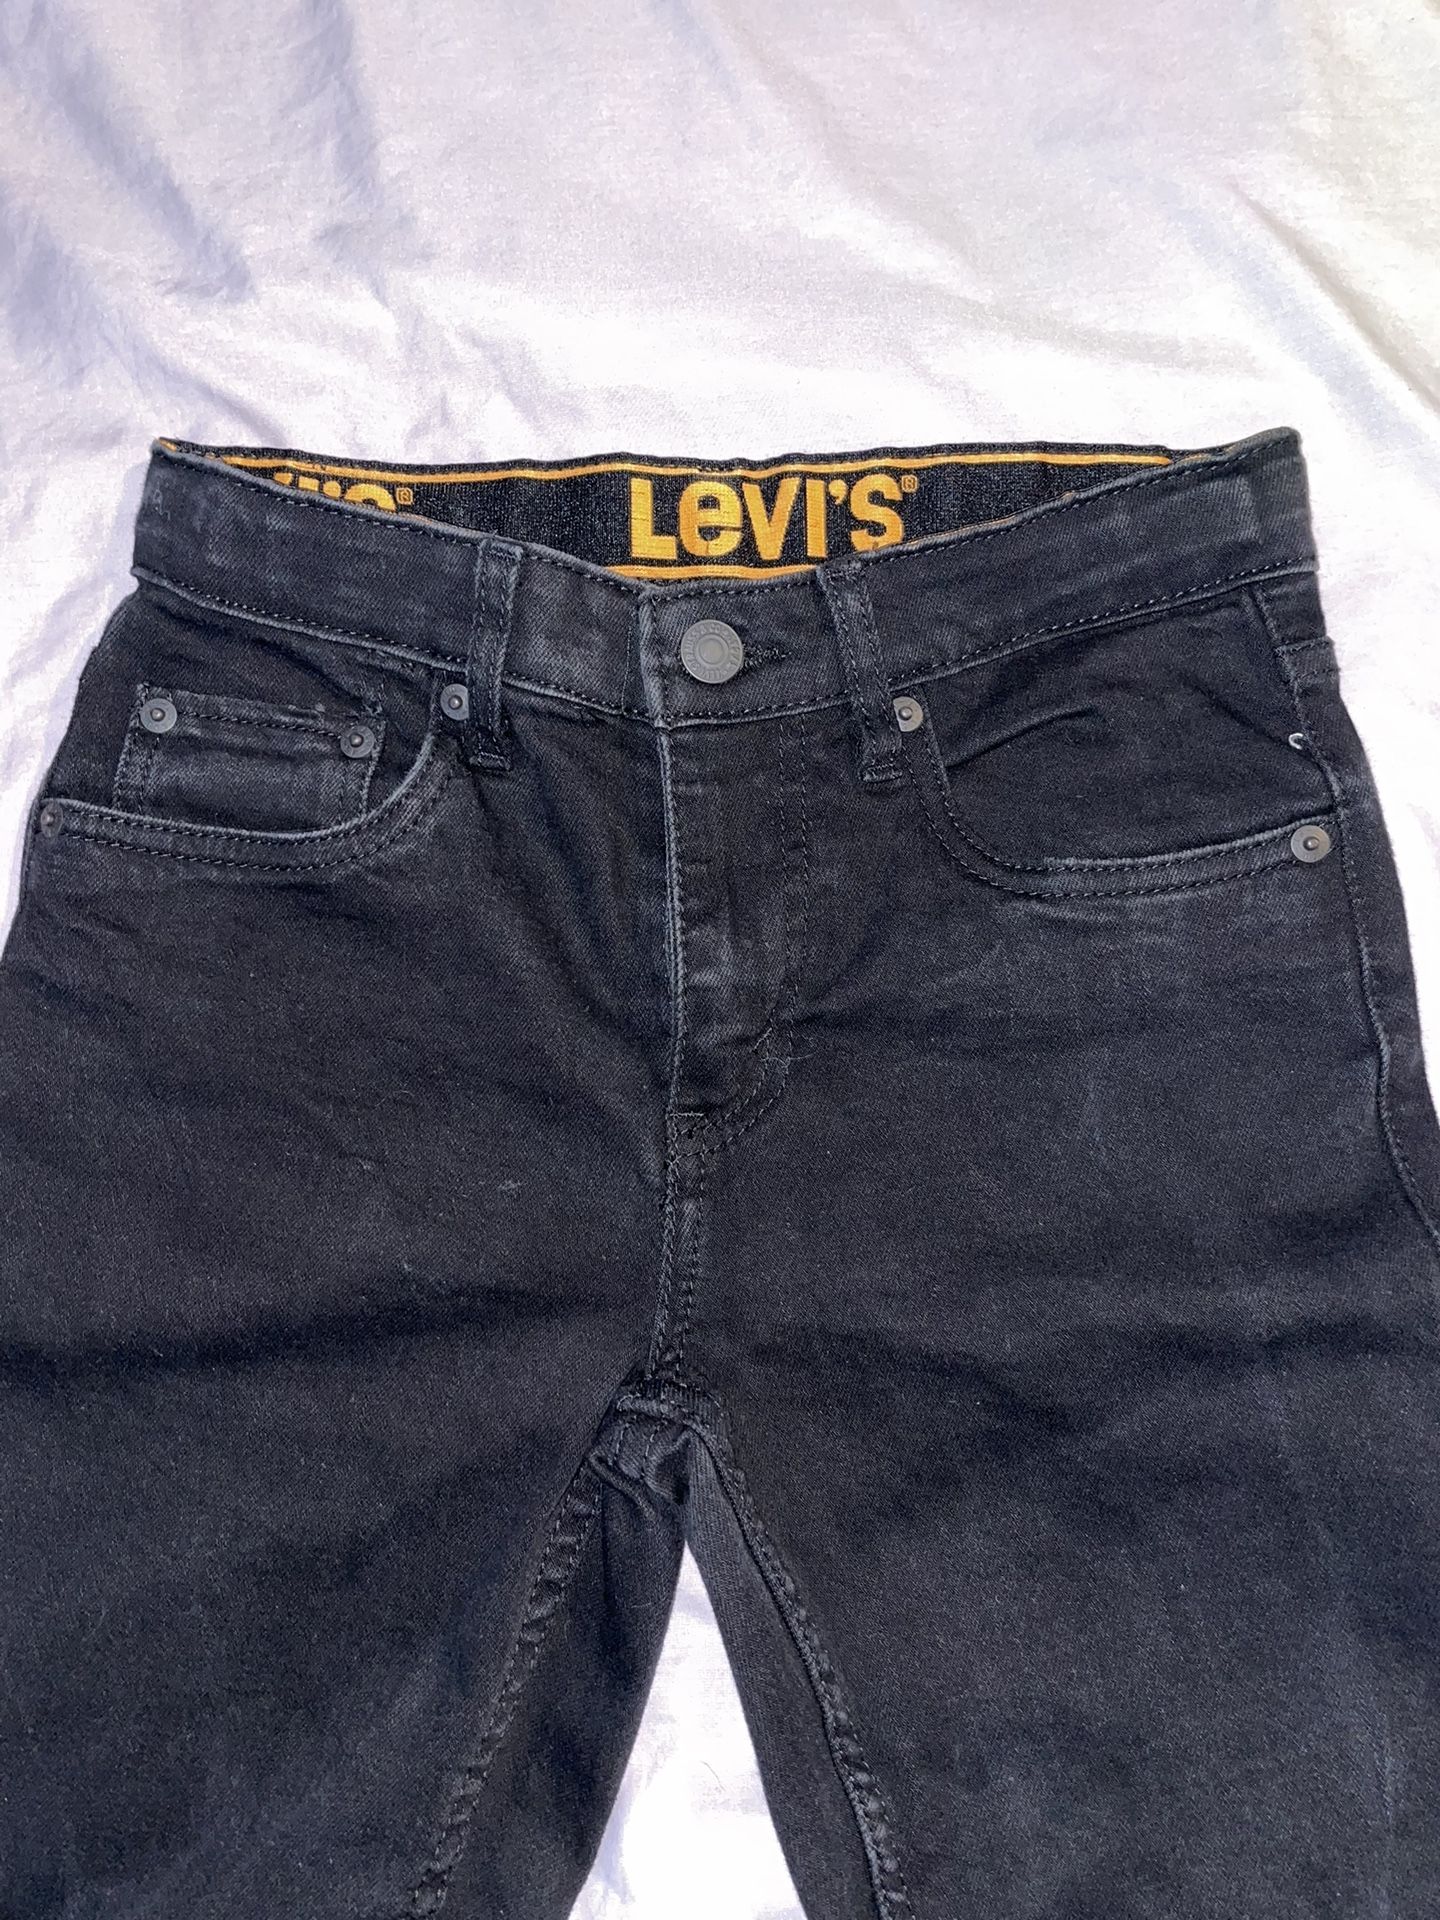 Levi’s Size 12 Boys  jeans